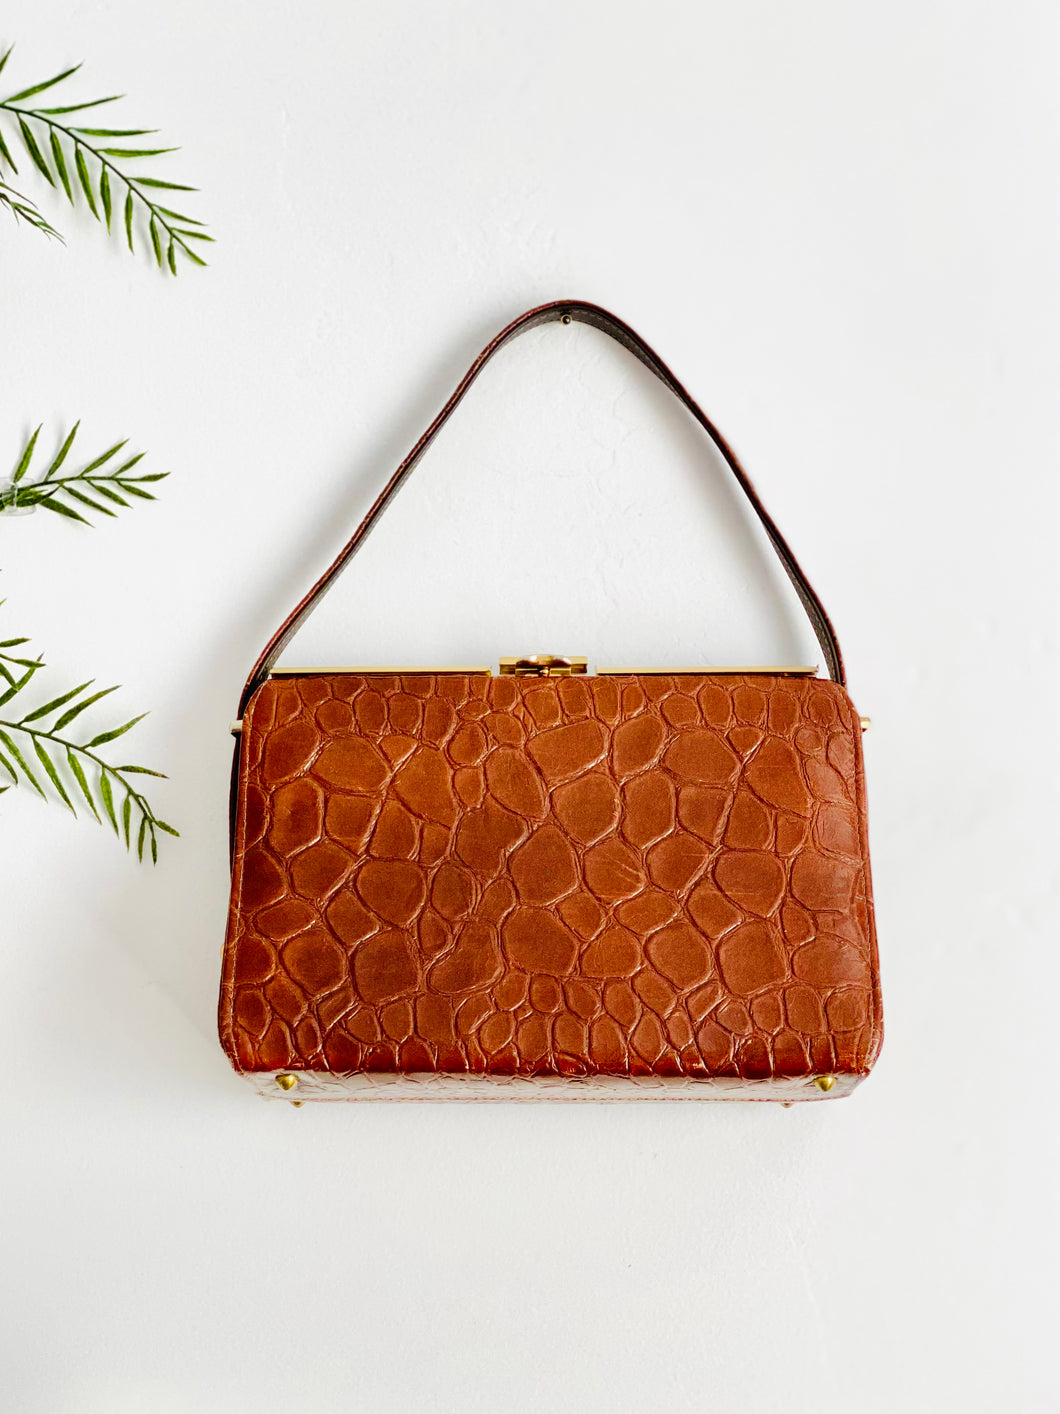 Vintage brown faux crocodile leather handbag